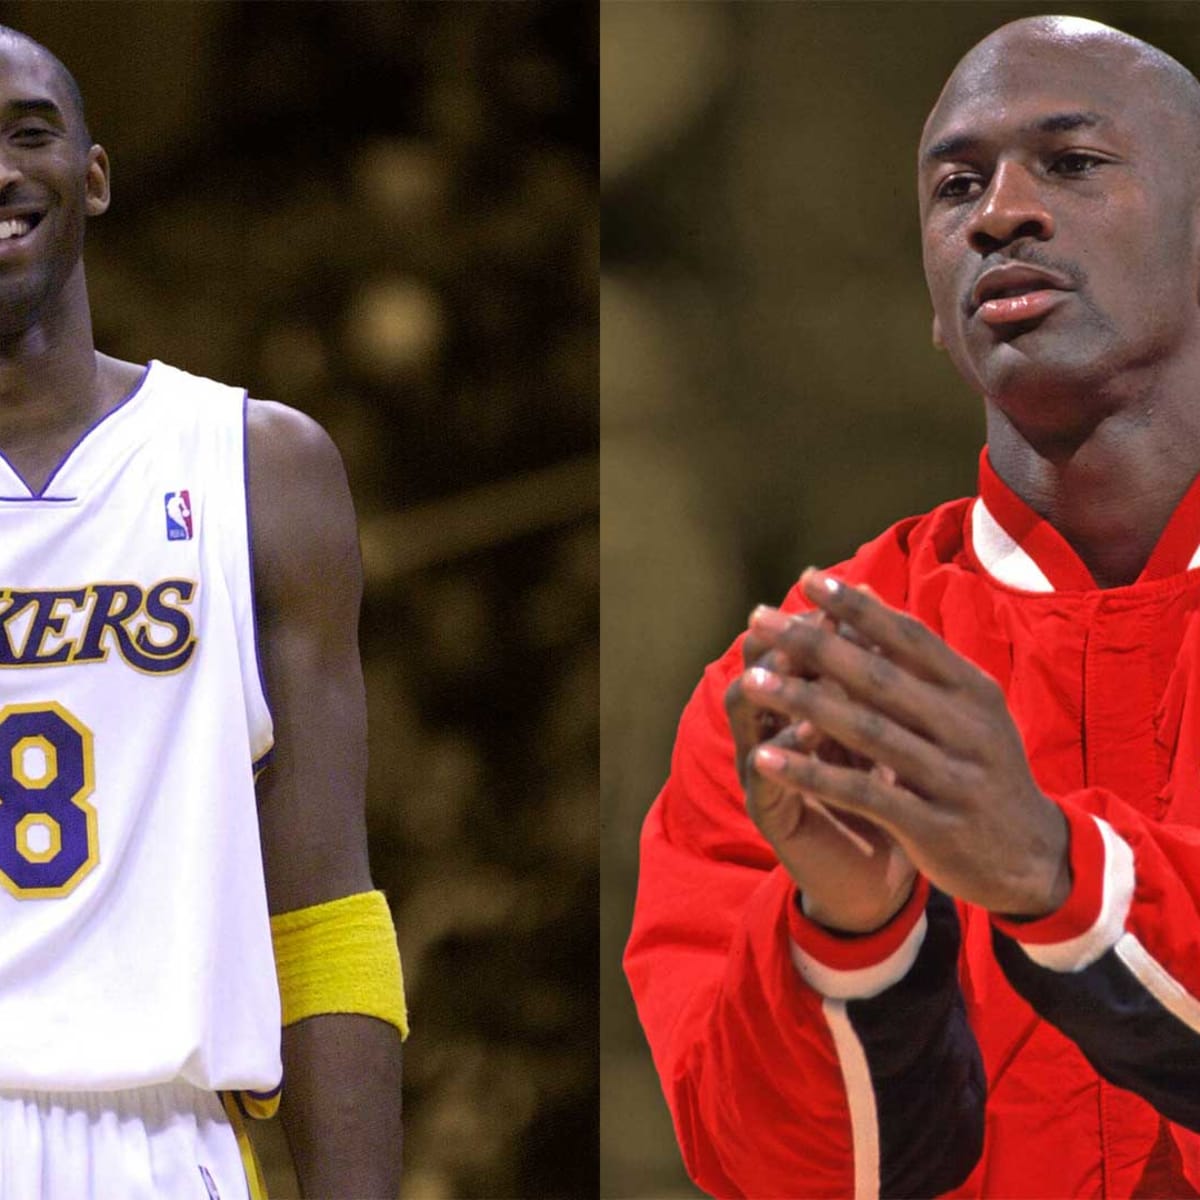 George Gervin Describes Michael Jordan As An A**hole And Kobe